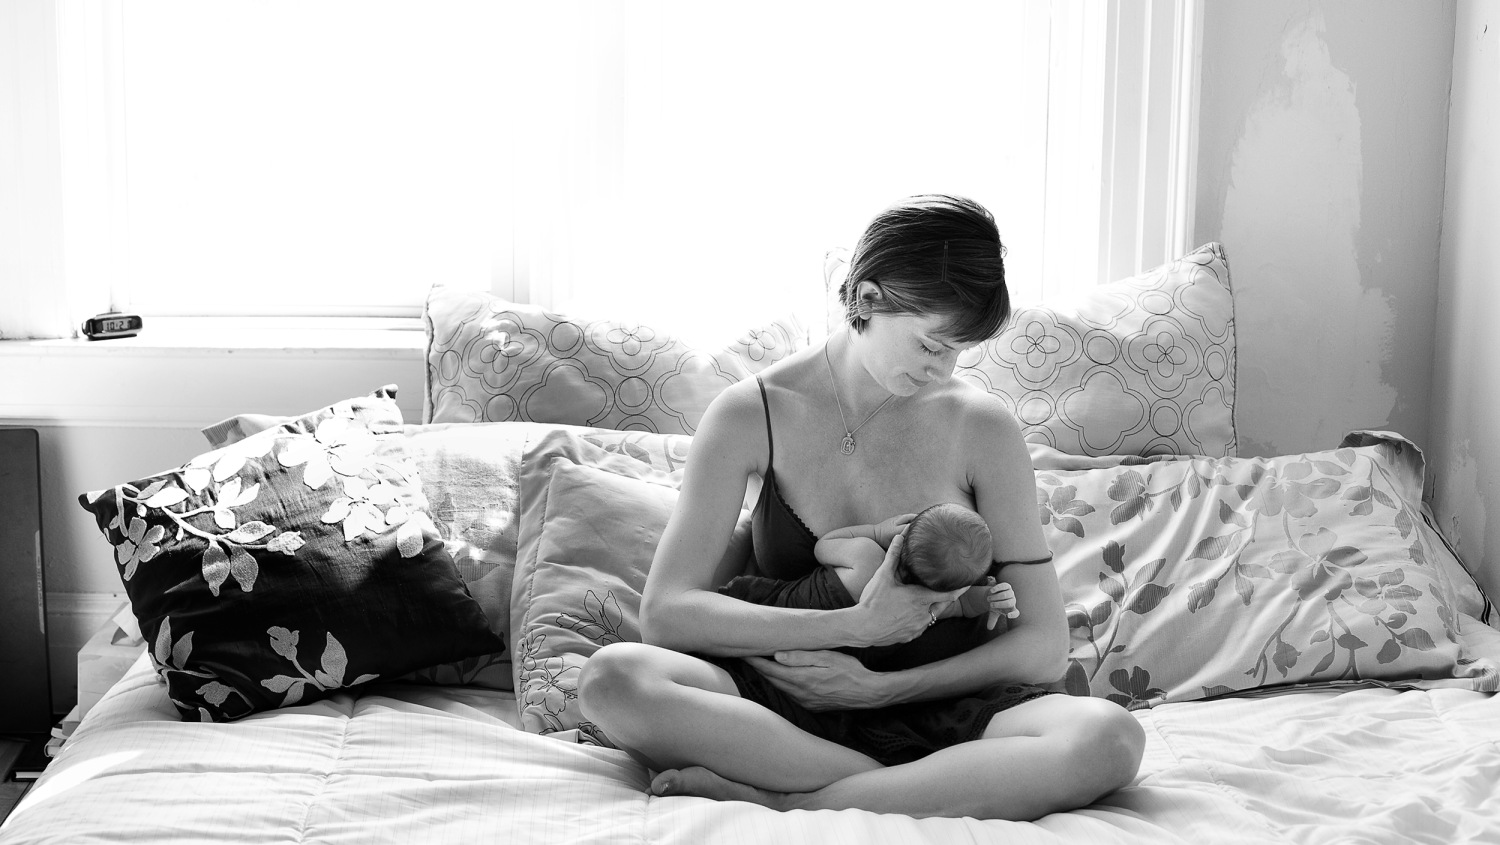 Sleeping Porn Mom Captions - Breast-feeding selfies, portraits, let new moms flaunt nursing pride